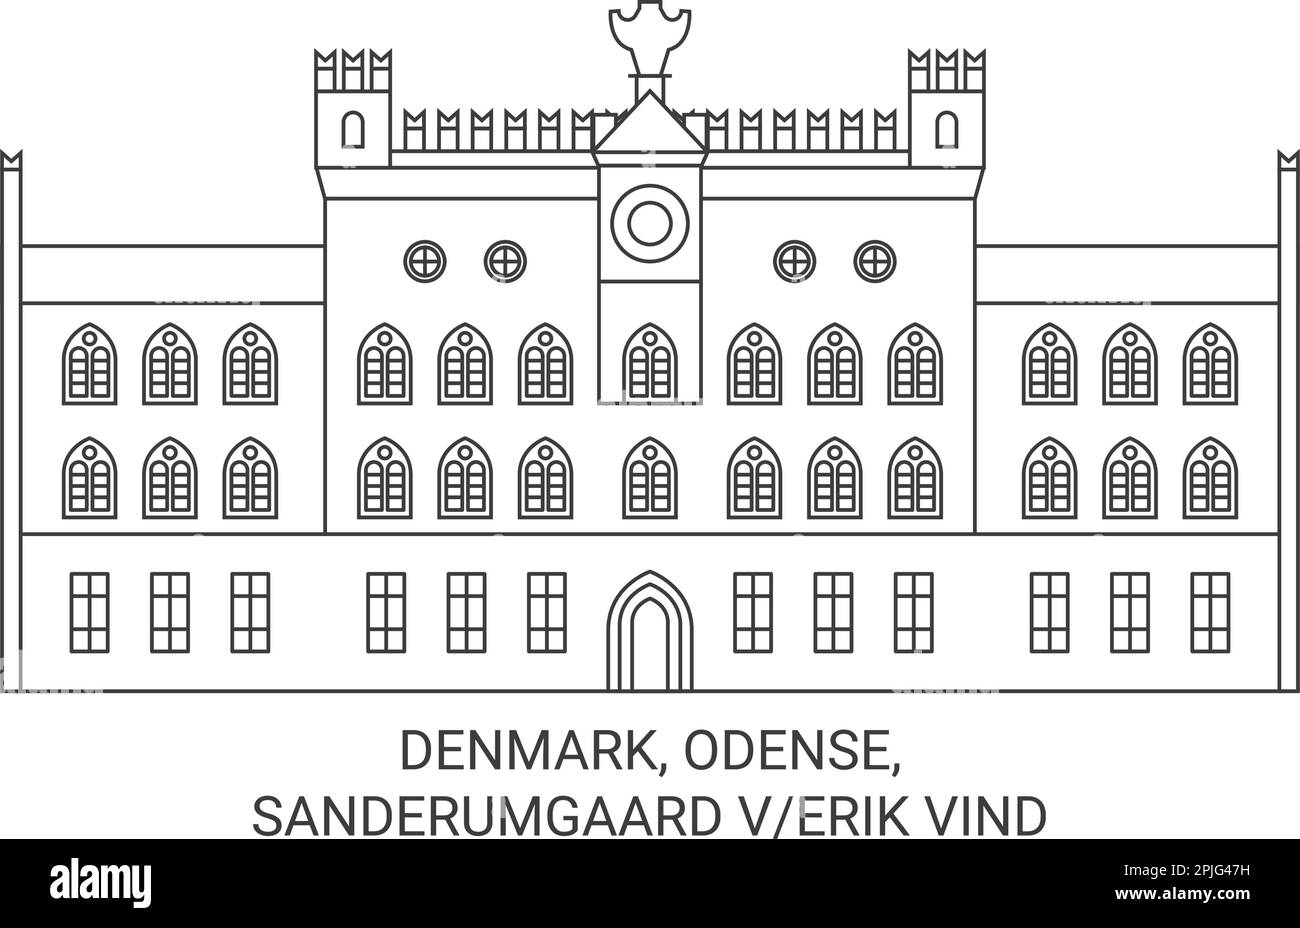 Denmark castles Stock Vector Images - Alamy